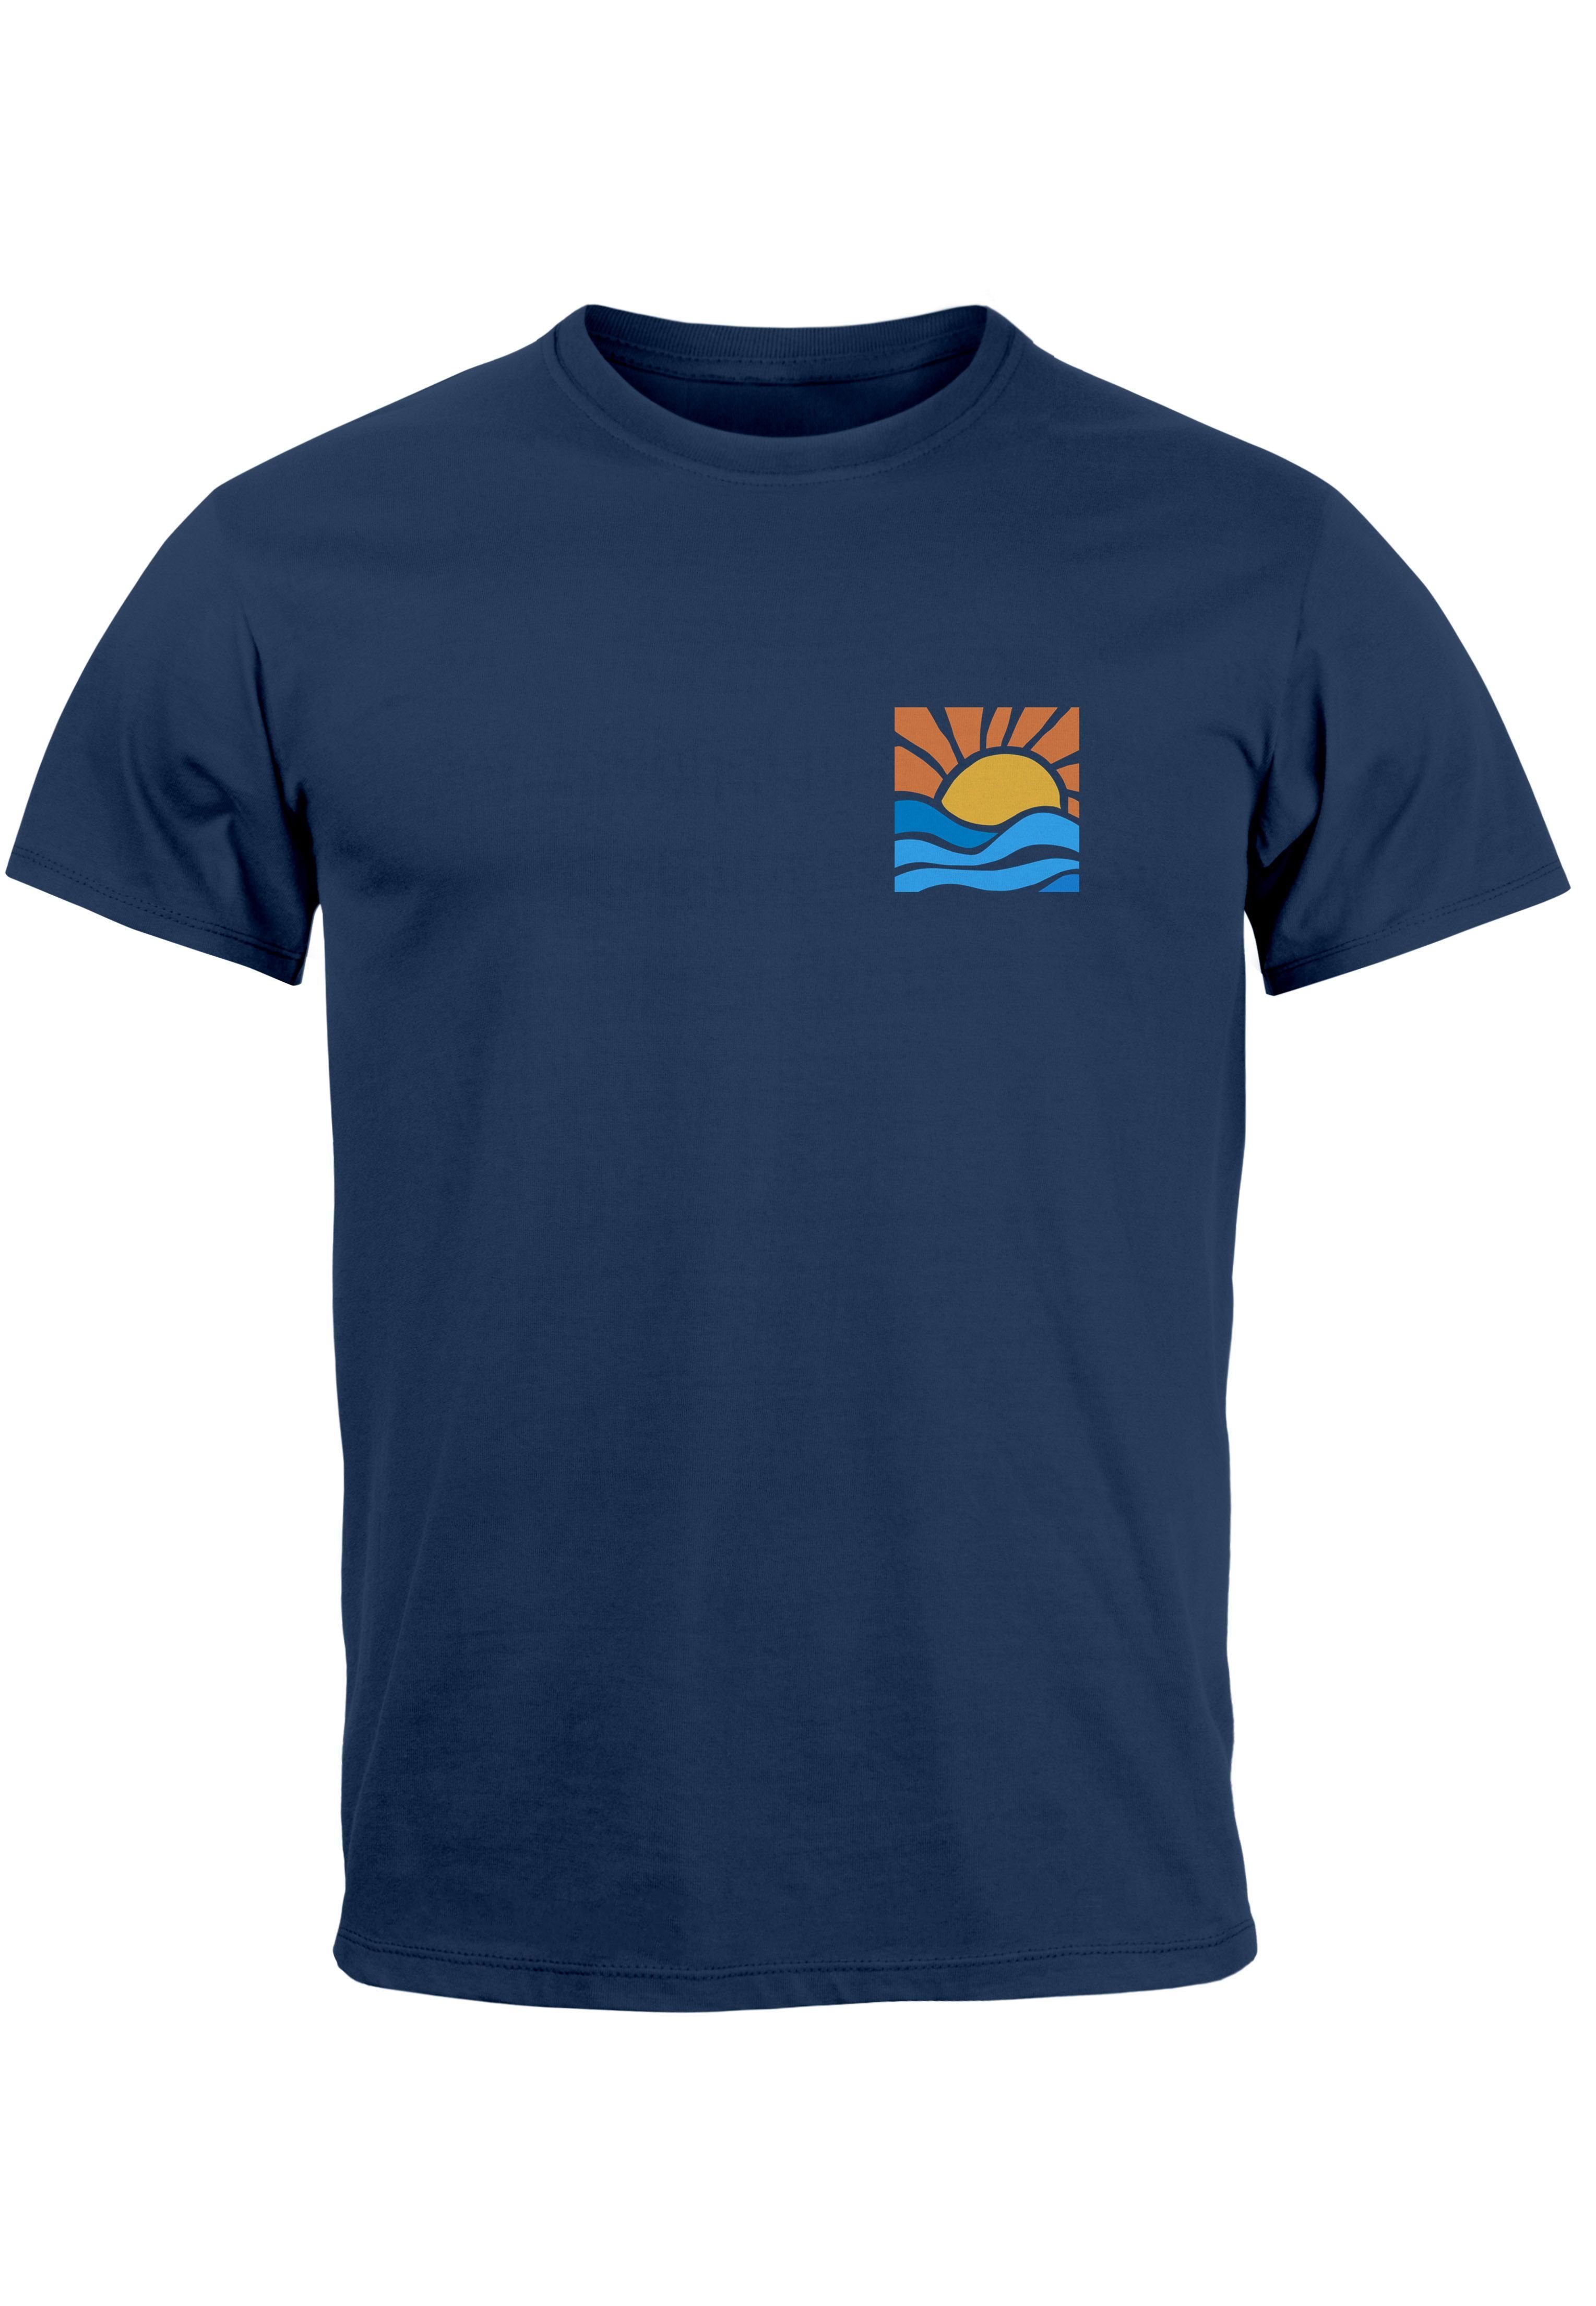 Sommer Welle Strand mit Neverless Style navy T-Shirt Herren Print Logo Beach Print-Shirt Fashio Sonne Print